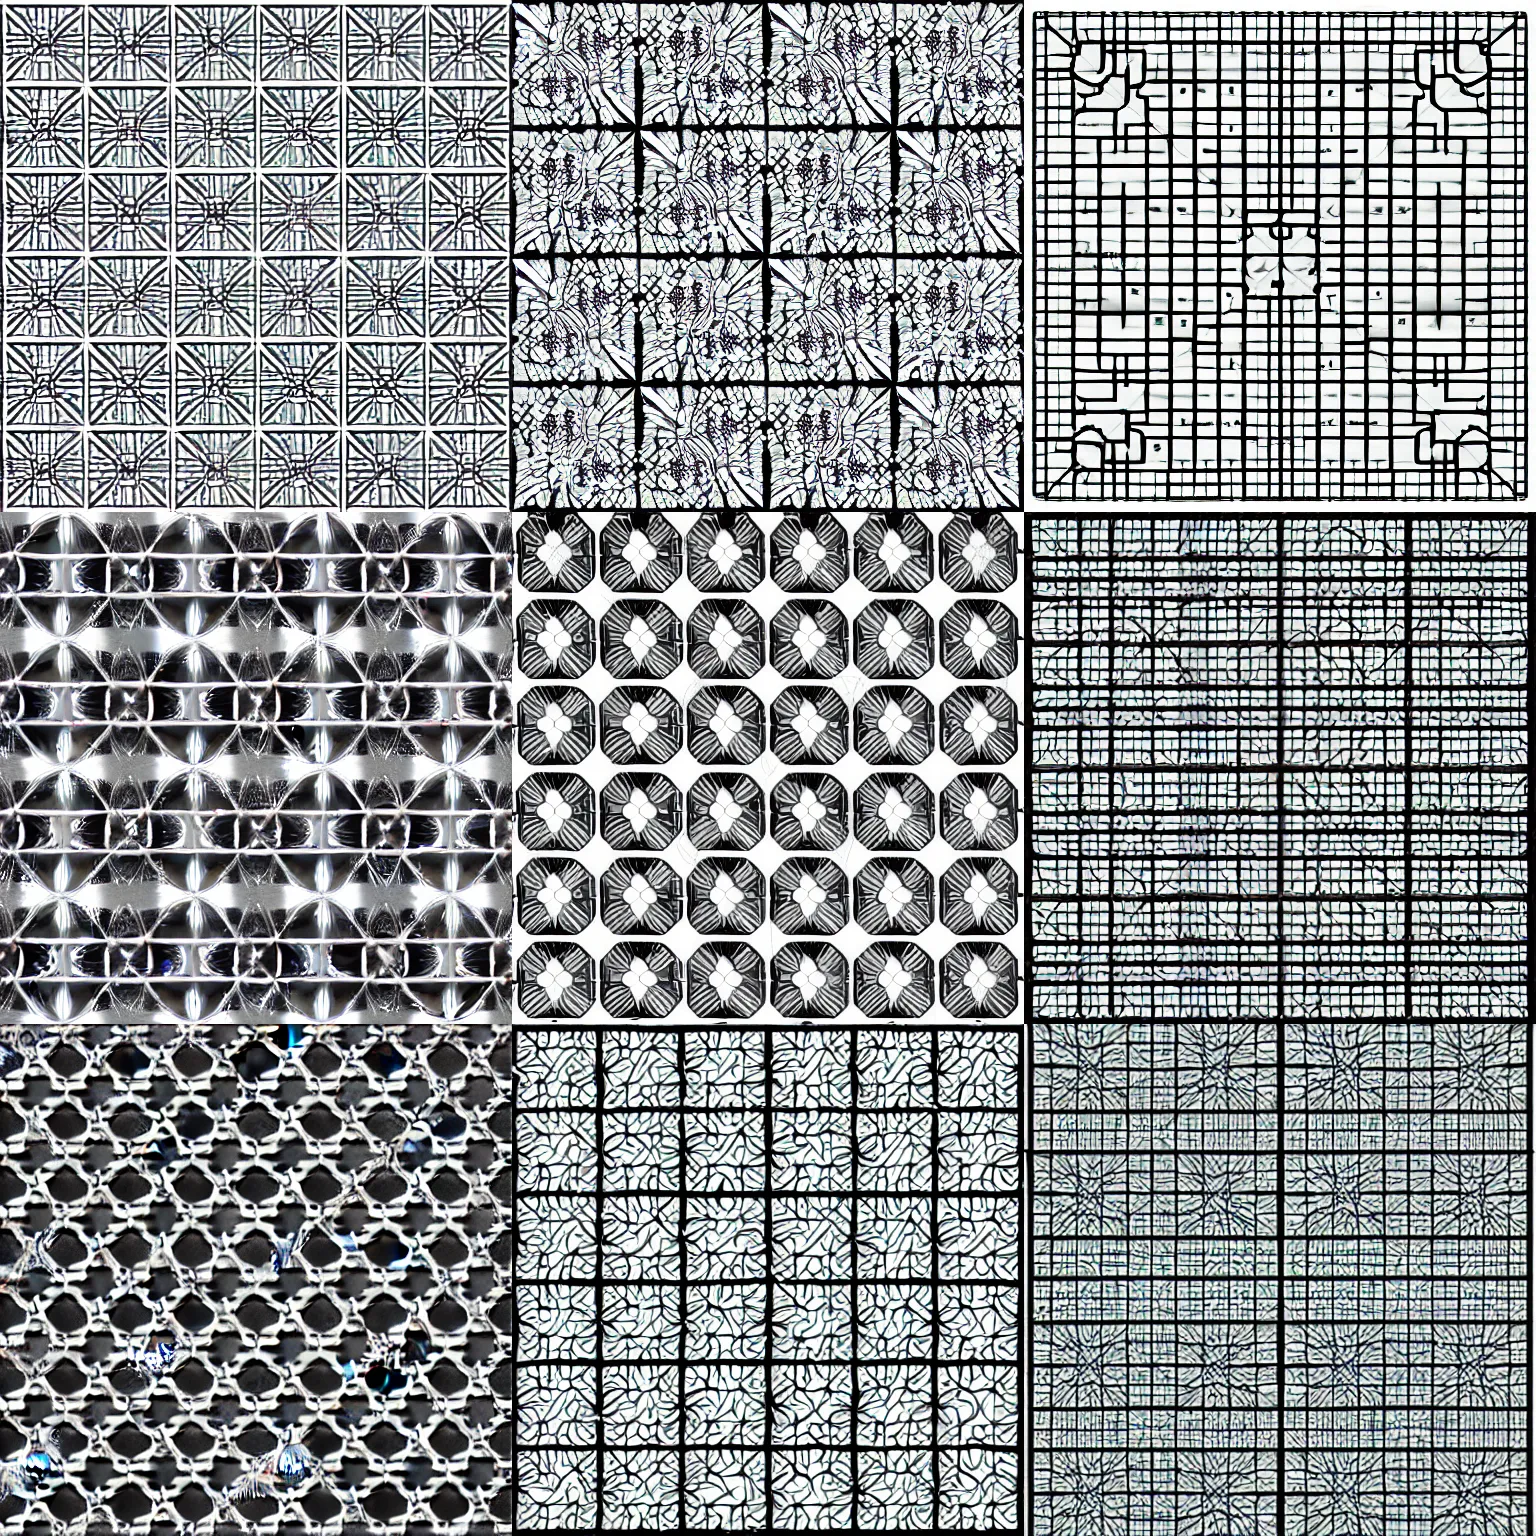 Prompt: fractal grid of metallic plates